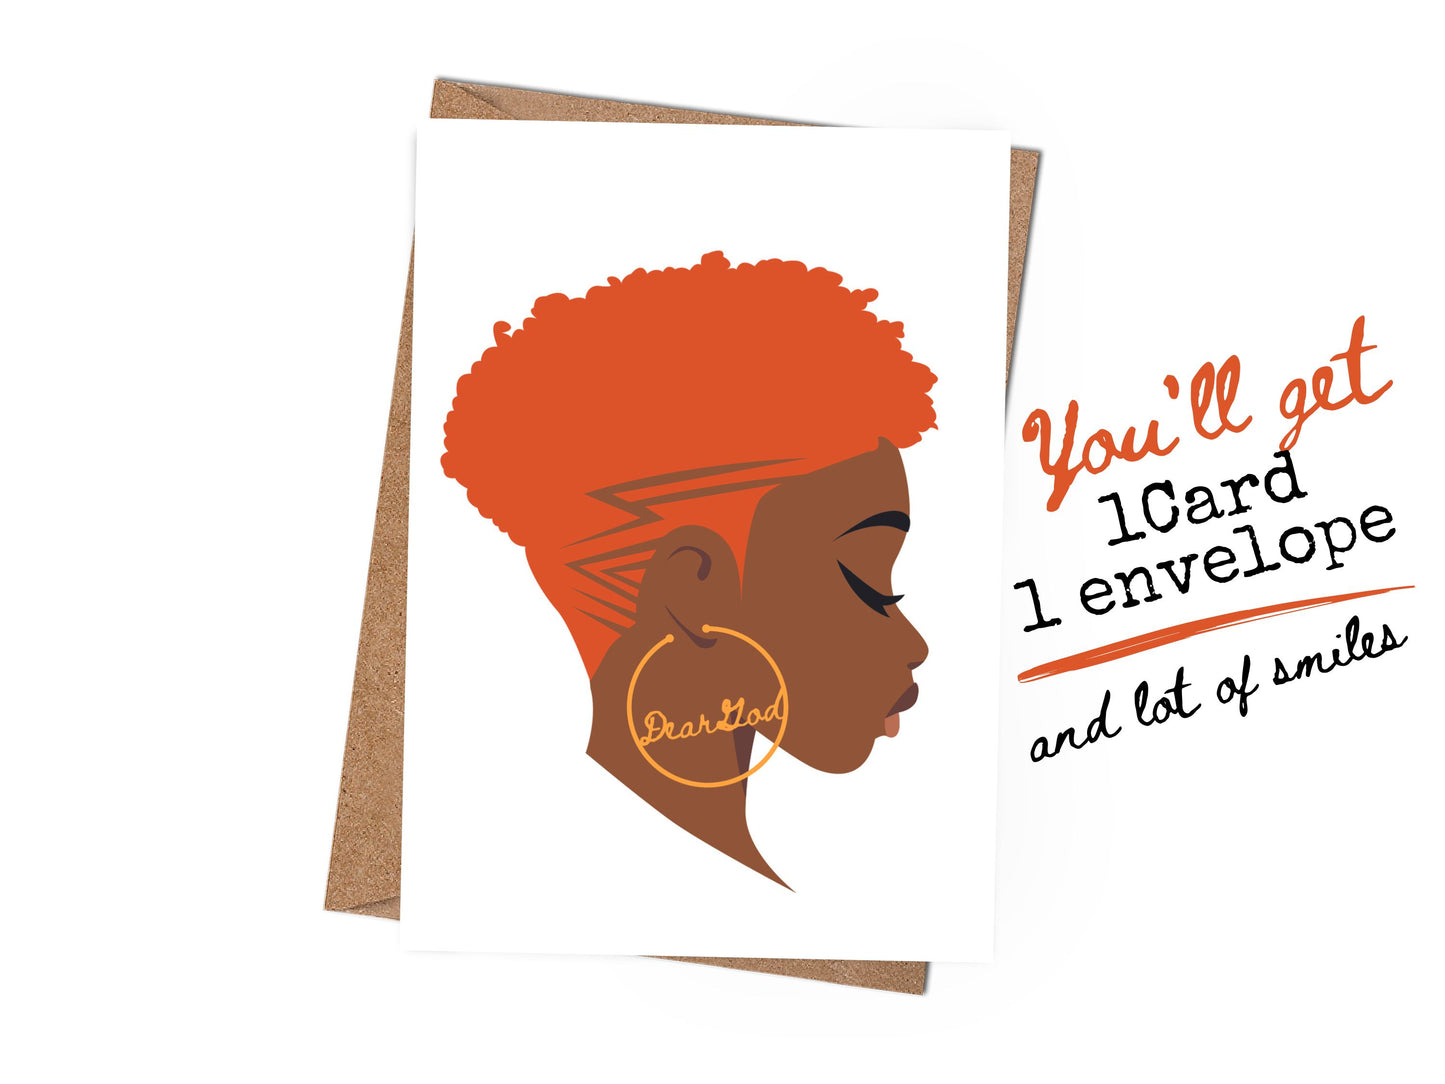 Religious Birthday Card| African American Greeting Card| Black Woman Birthday| Happy Birthday